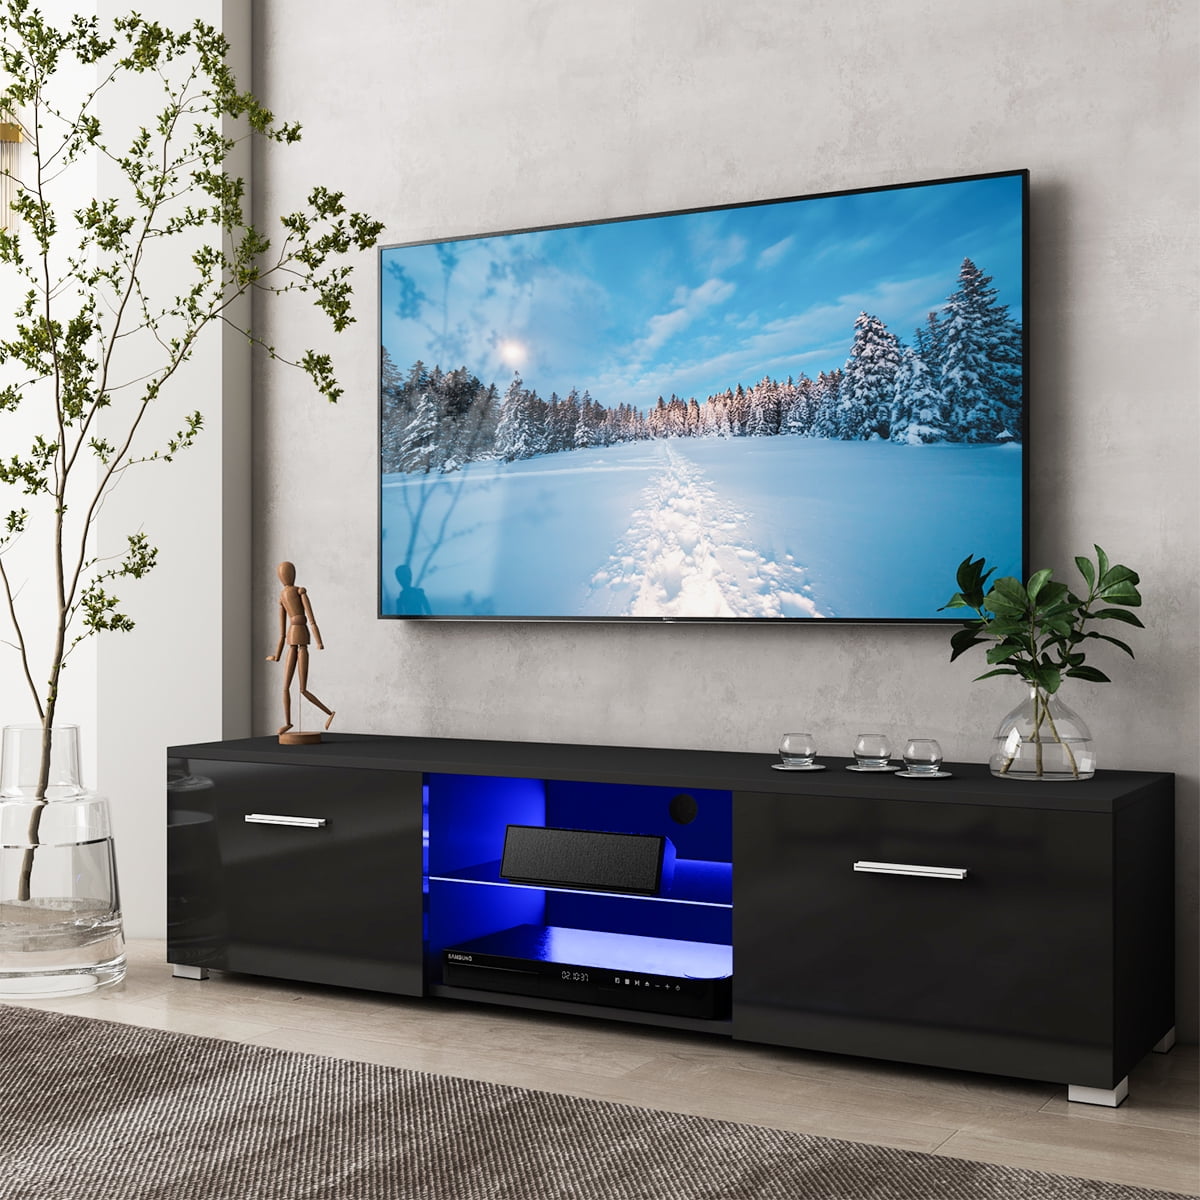 Details about   TV Stand Unit Cabinet with LED Lights Shelves Living Room Furniture 